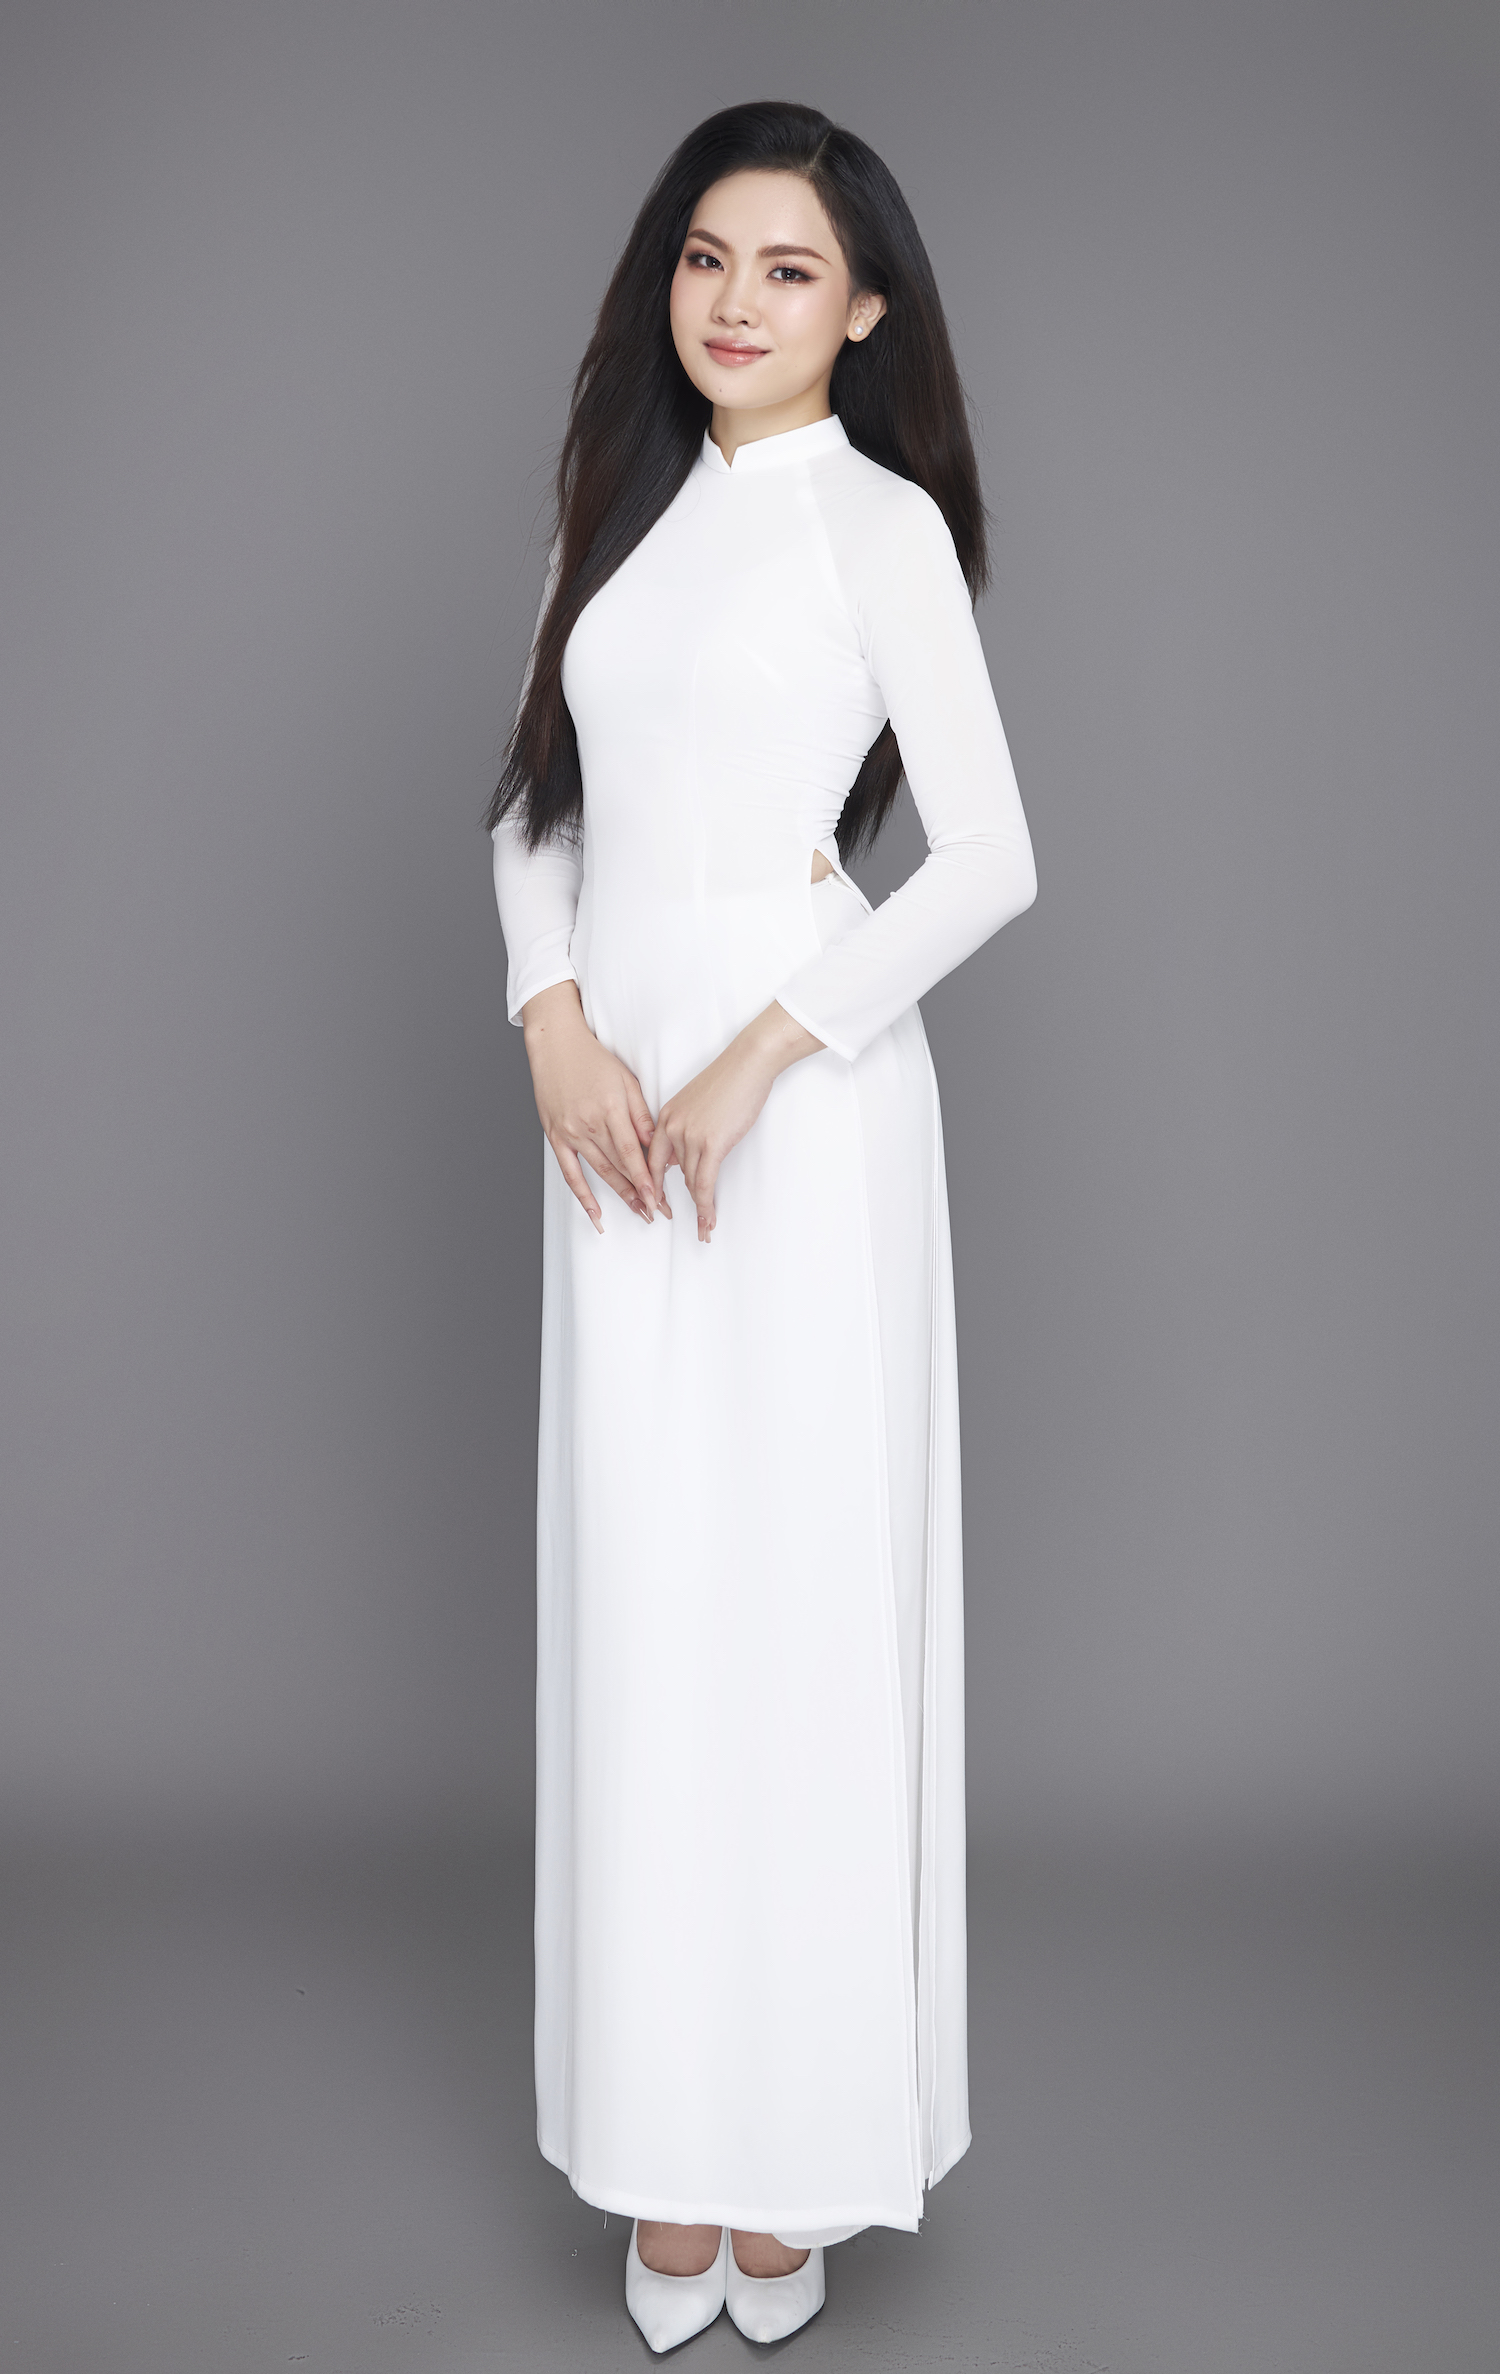 Nhan sắc nữ sinh RMIT thi Miss World Vietnam 2023 - Ảnh 3.